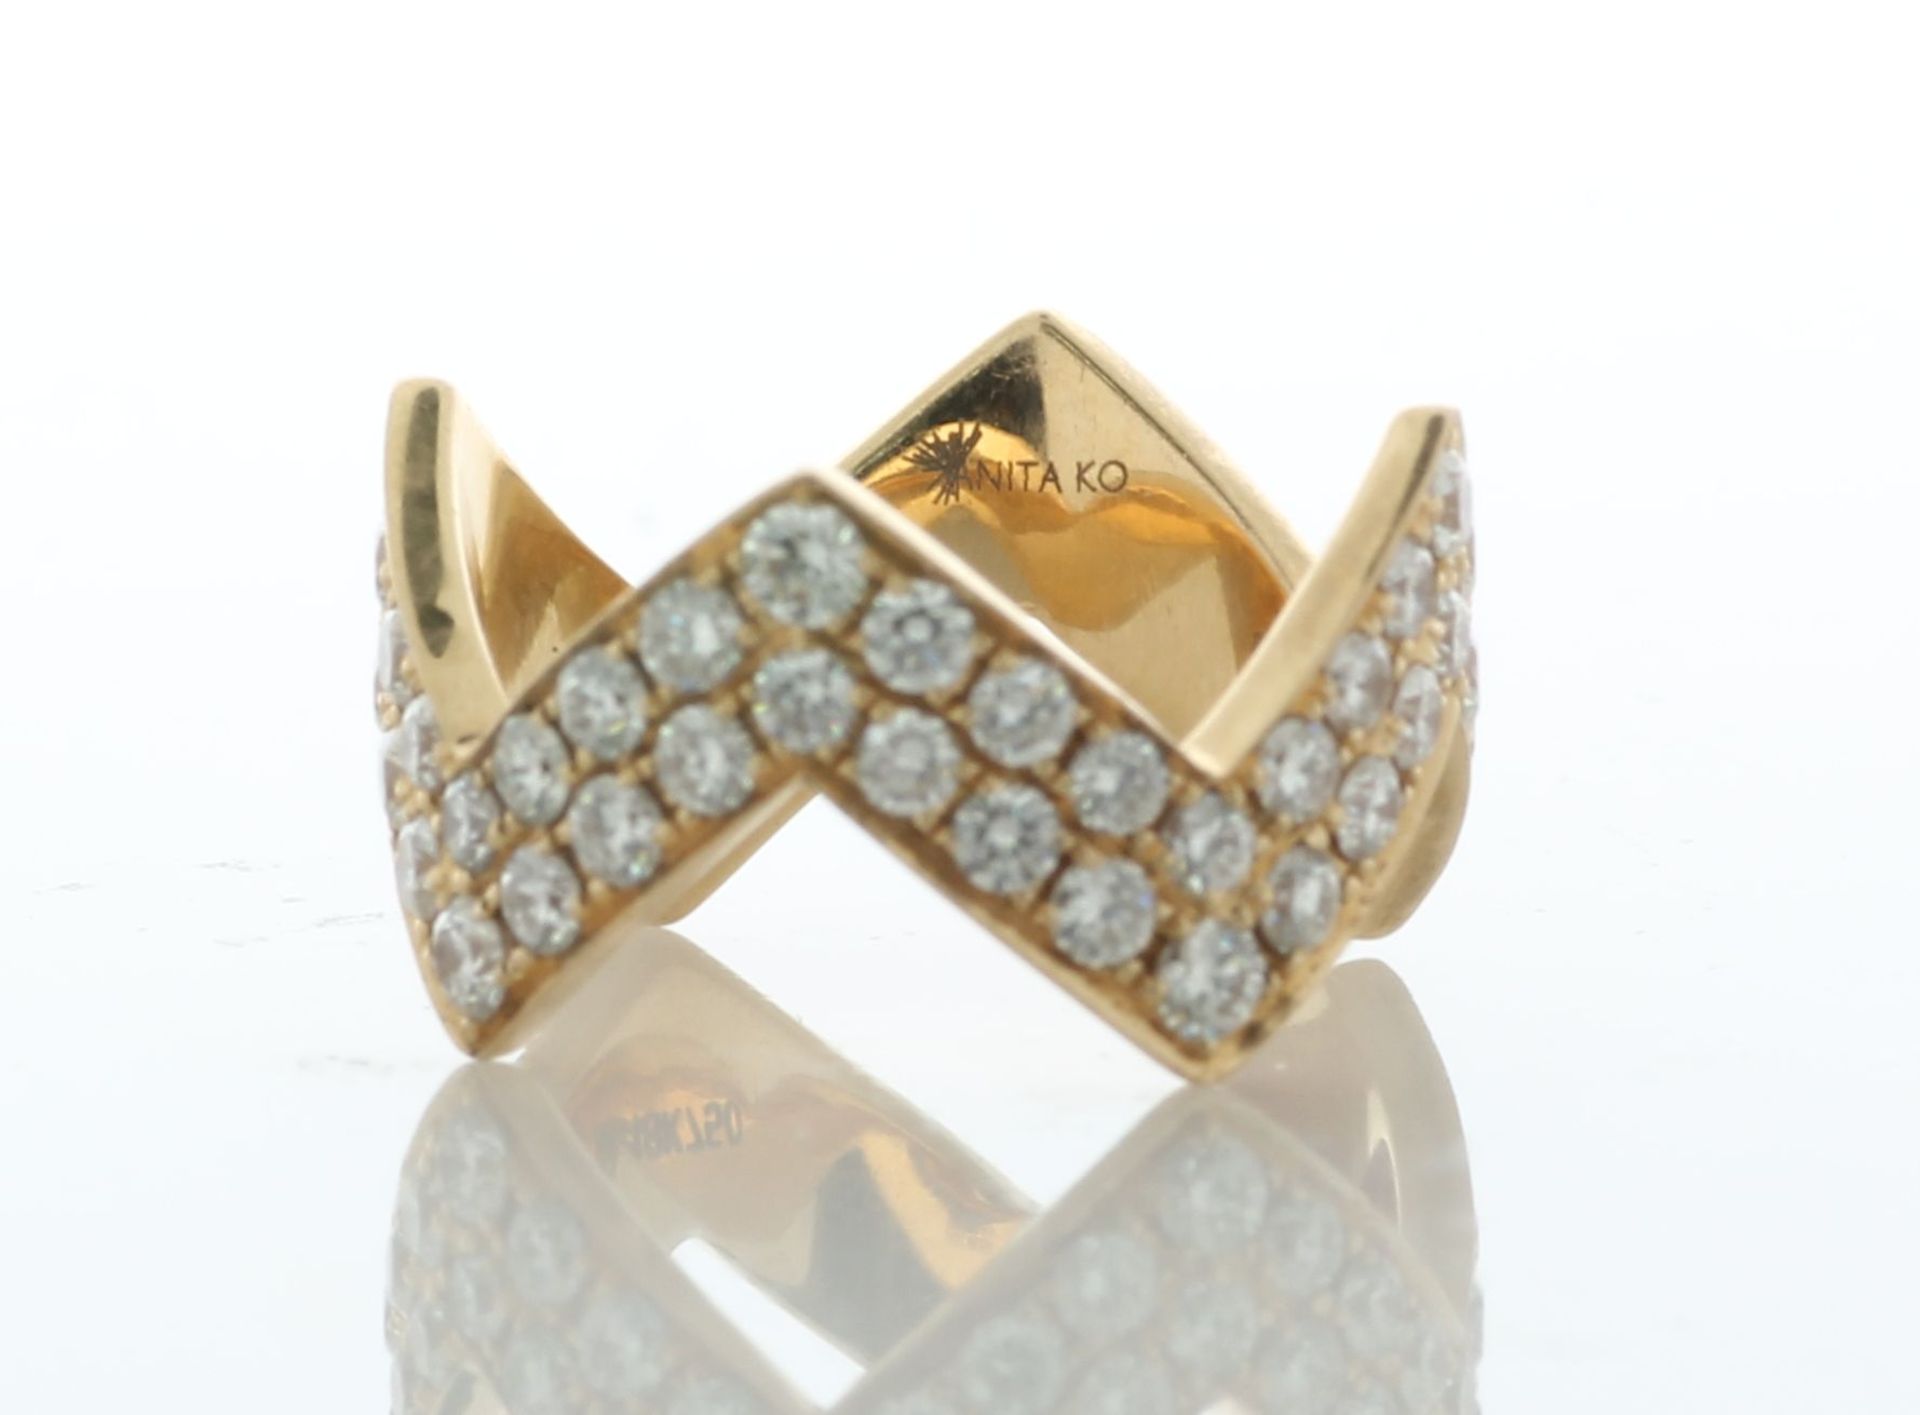 18ct Rose Gold Diamond Anita Ko Chevron Ring 2.09 Carats - Valued By AGI £7,250.00 - This stunning - Image 2 of 3